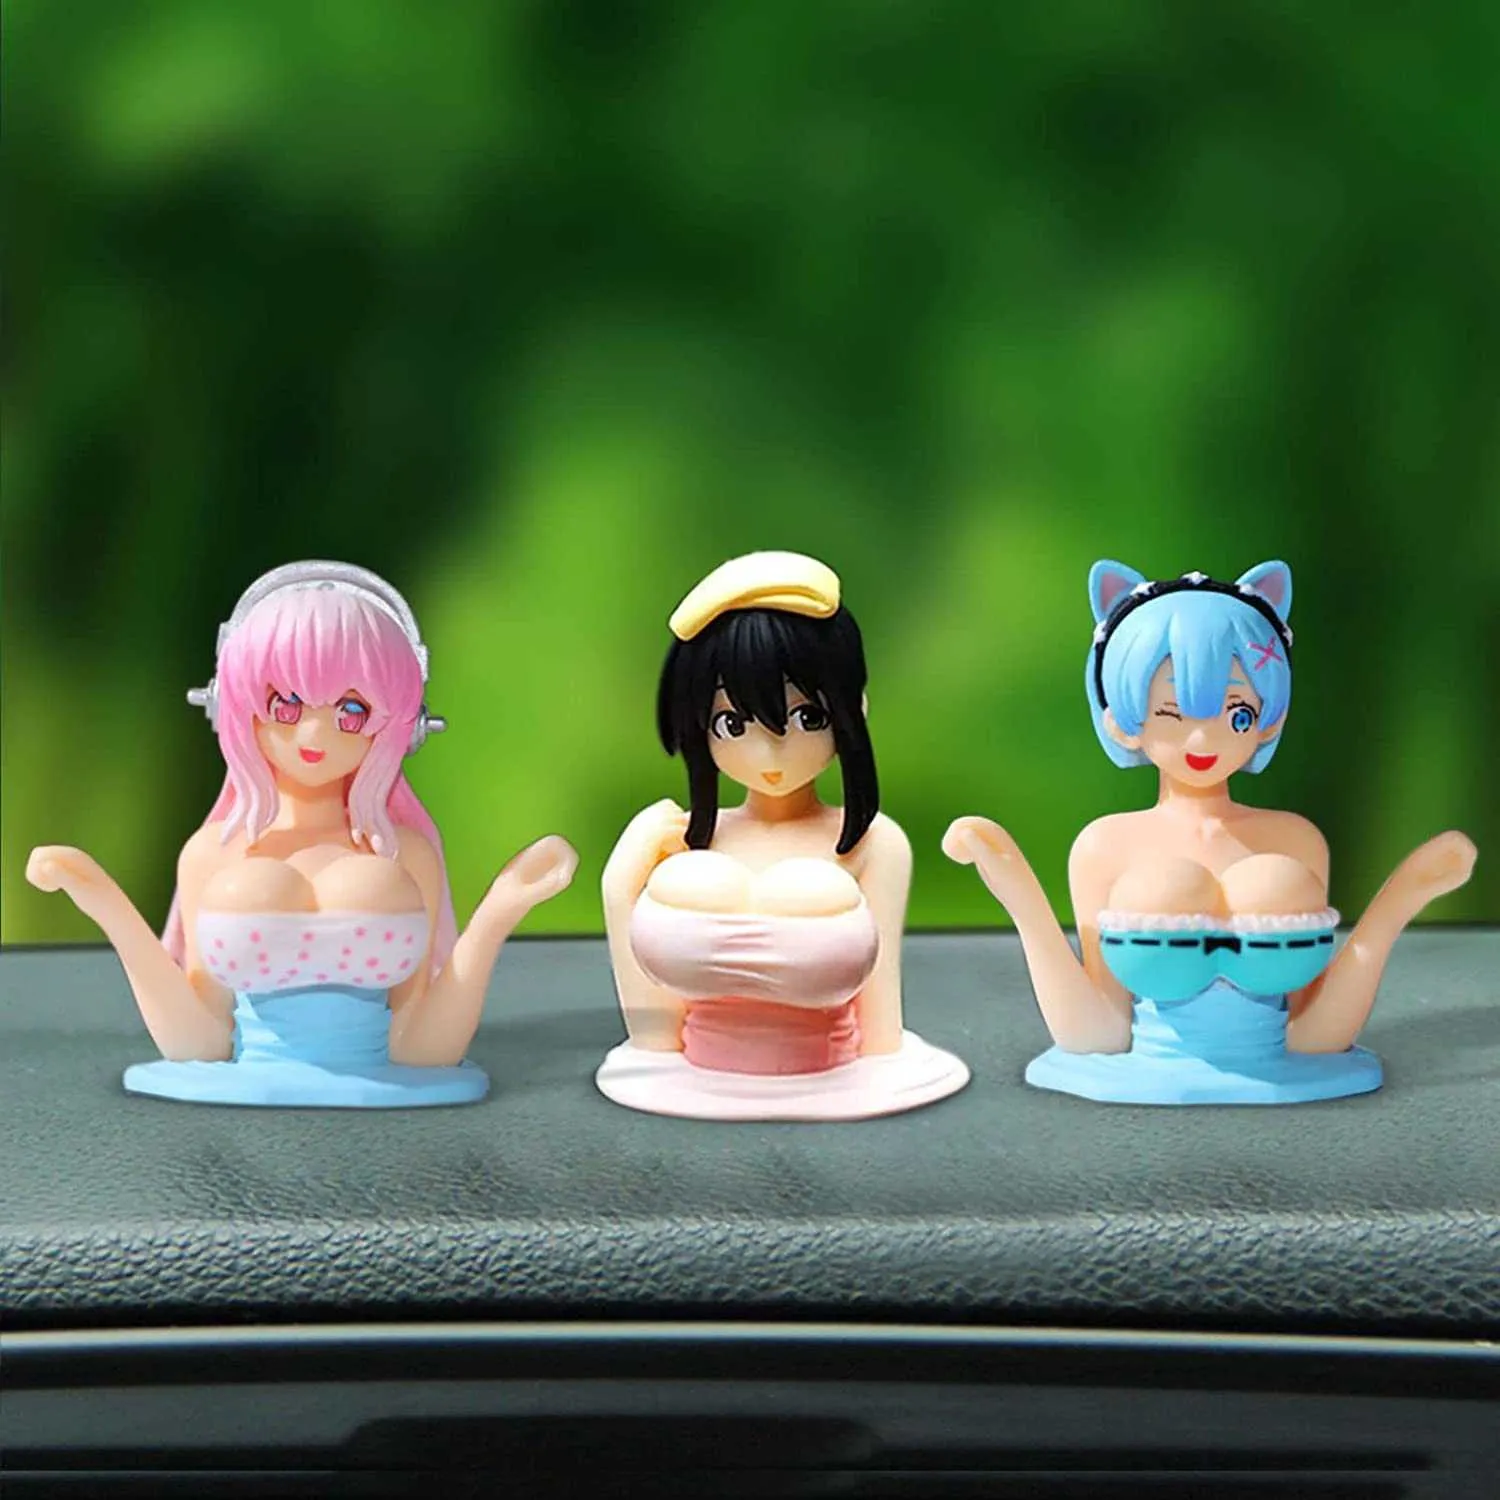 Shaking Chest Kanako Car Dashboard Decoration Anime Sexy Doll Figurine Gift